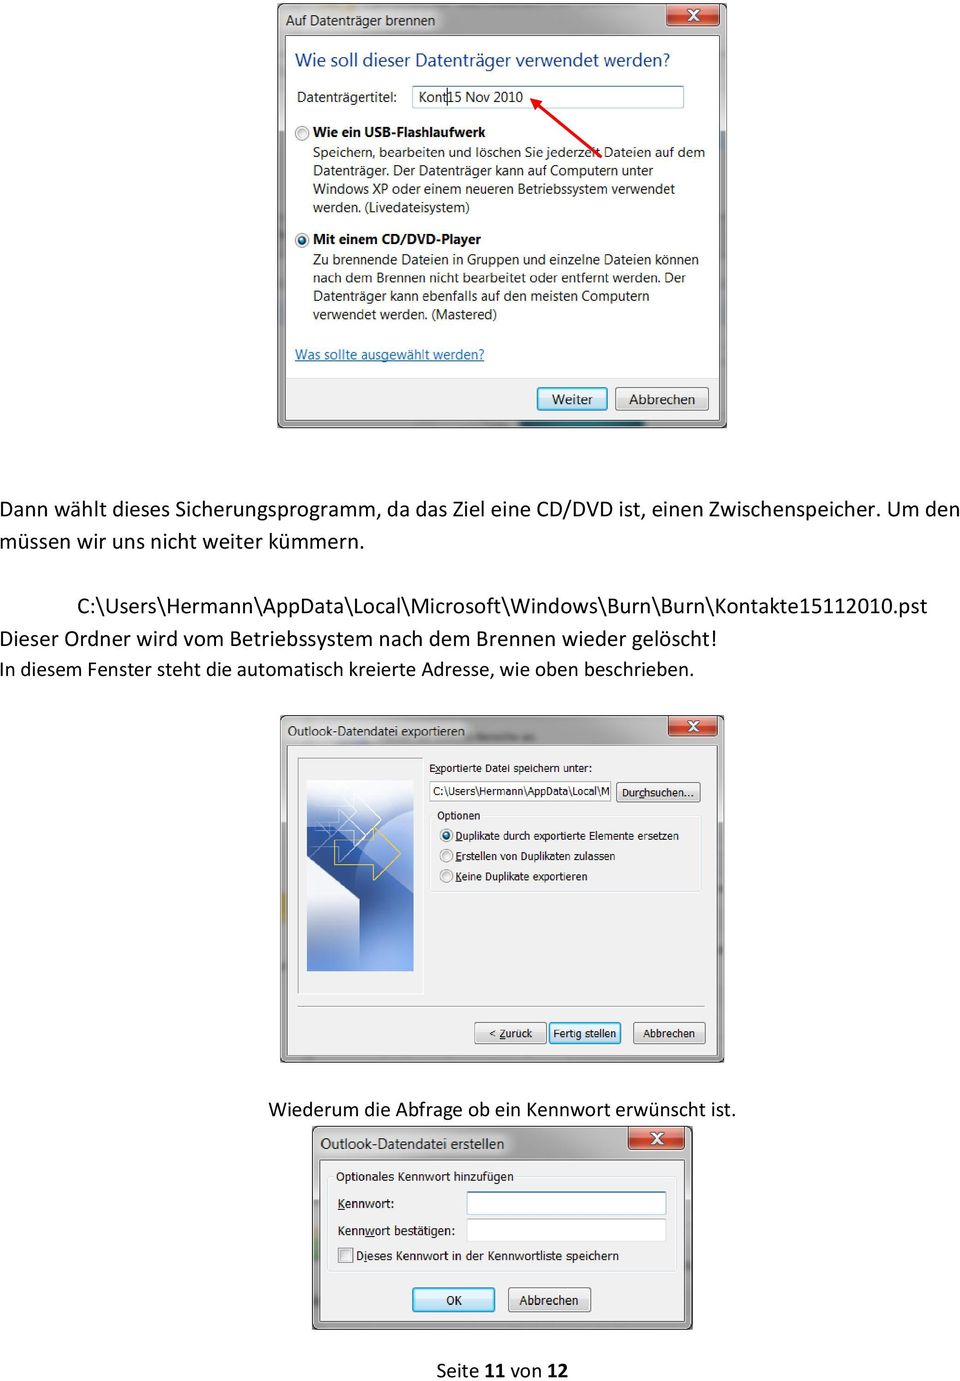 C:\Users\Hermann\AppData\Local\Microsoft\Windows\Burn\Burn\Kontakte15112010.